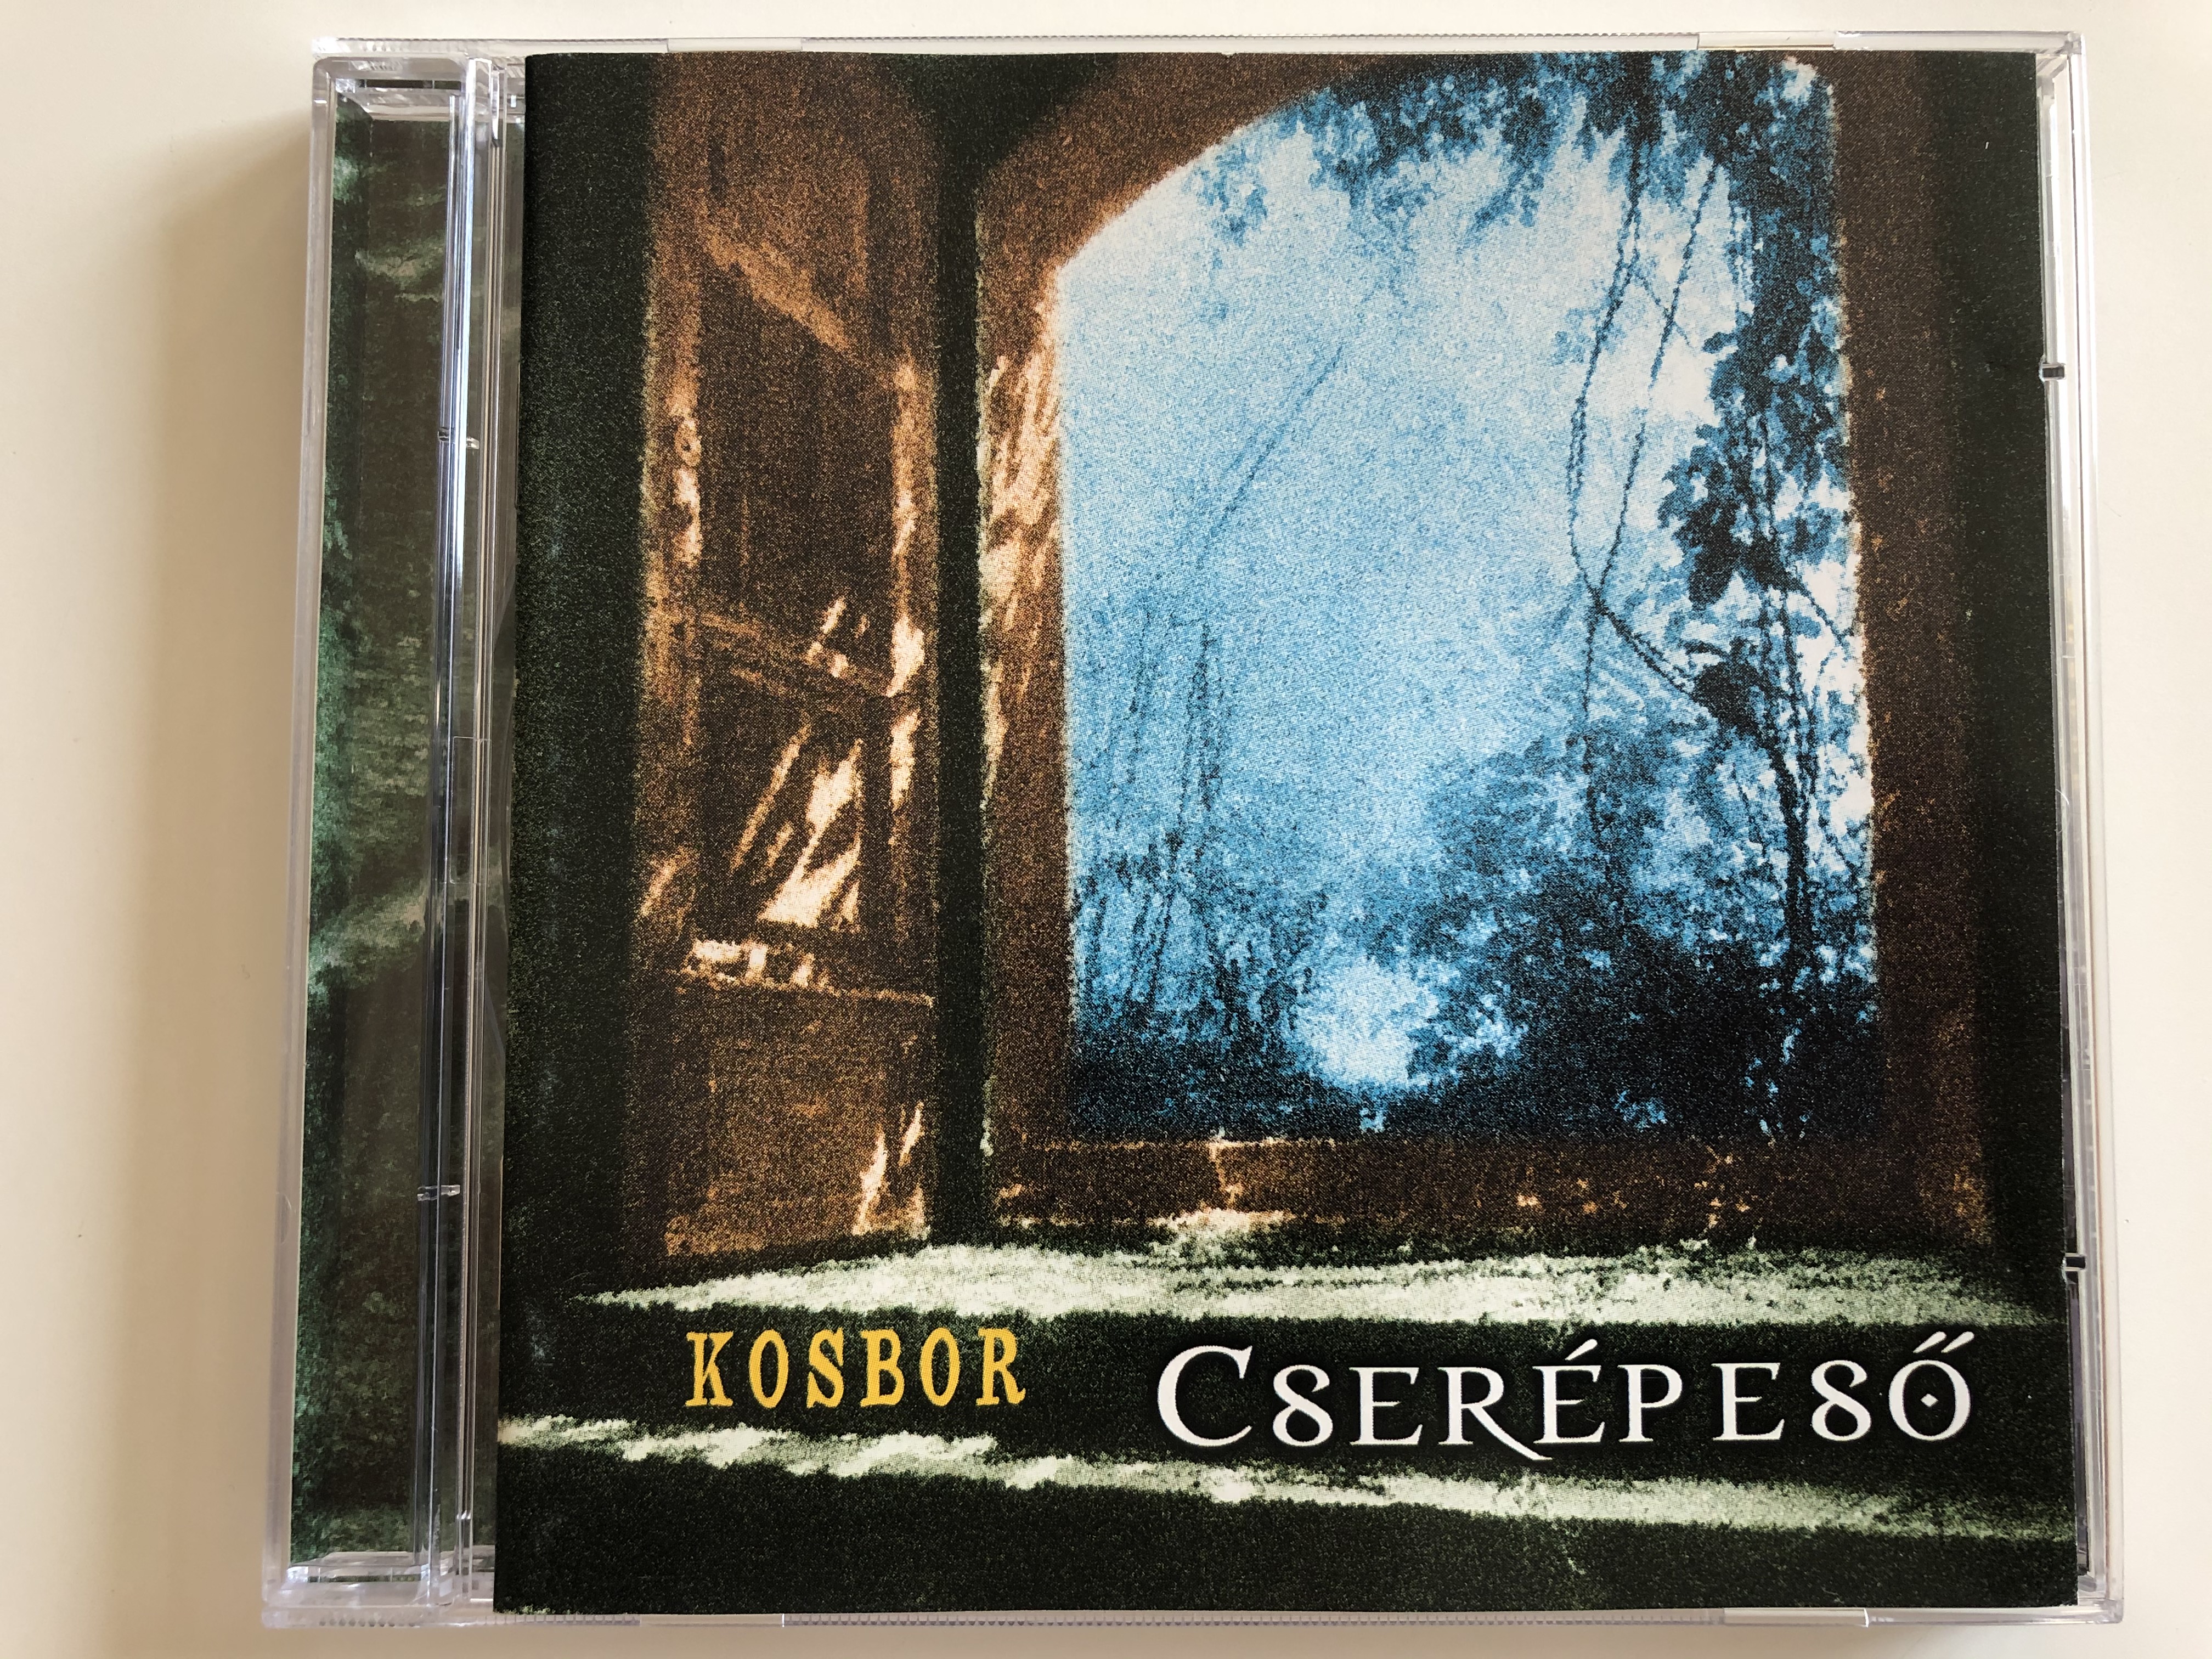 kosbor-cser-pes-gryllus-audio-cd-1999-gcd-012-1-.jpg